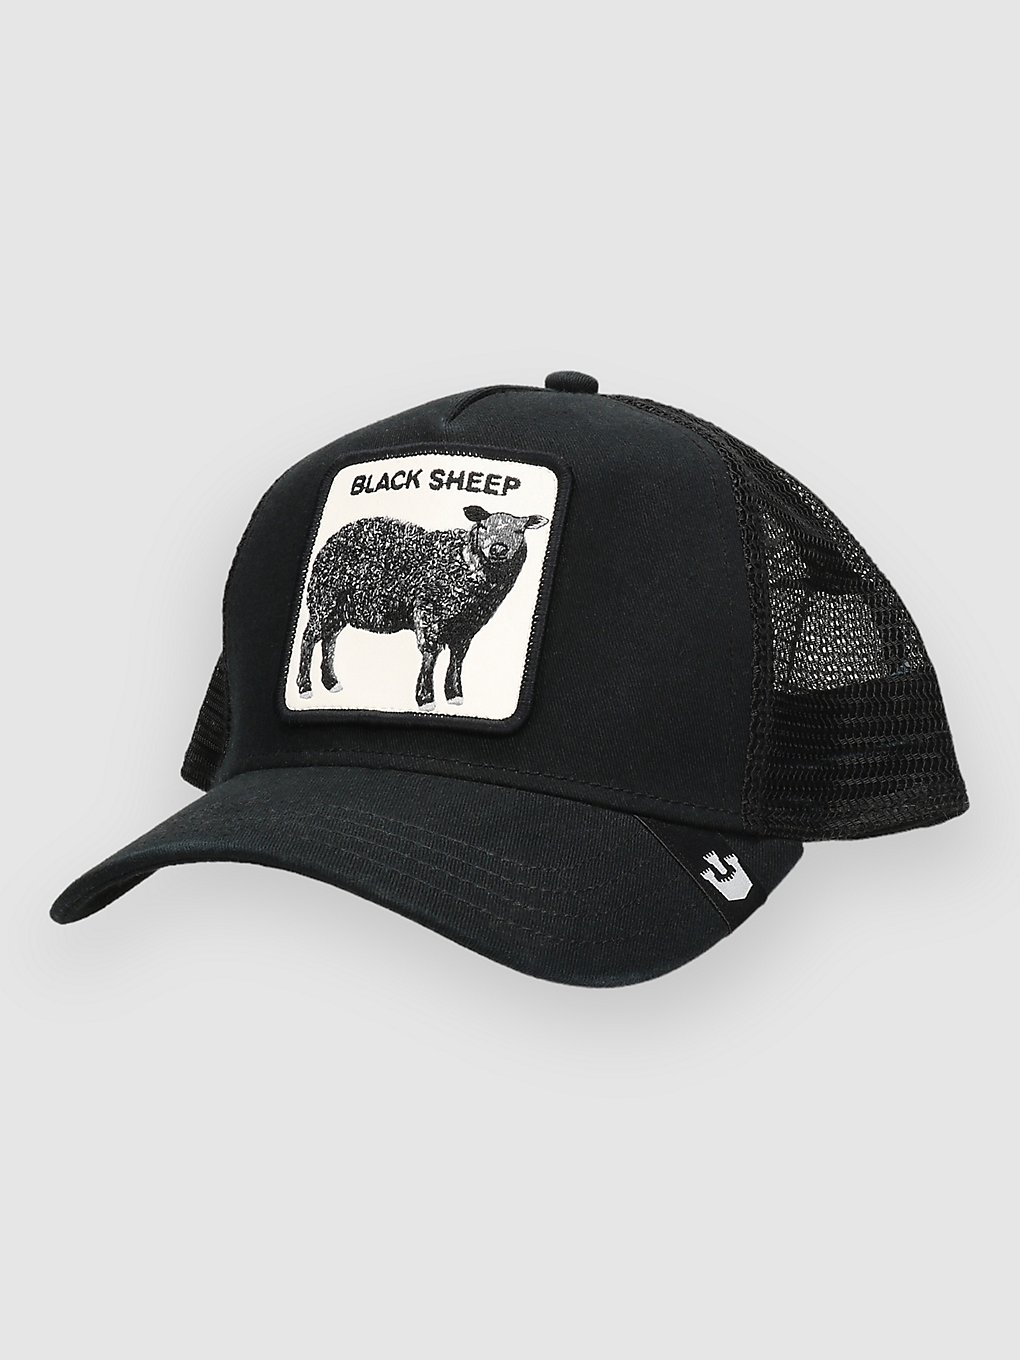 Goorin Bros The Black Sheep Cap black kaufen